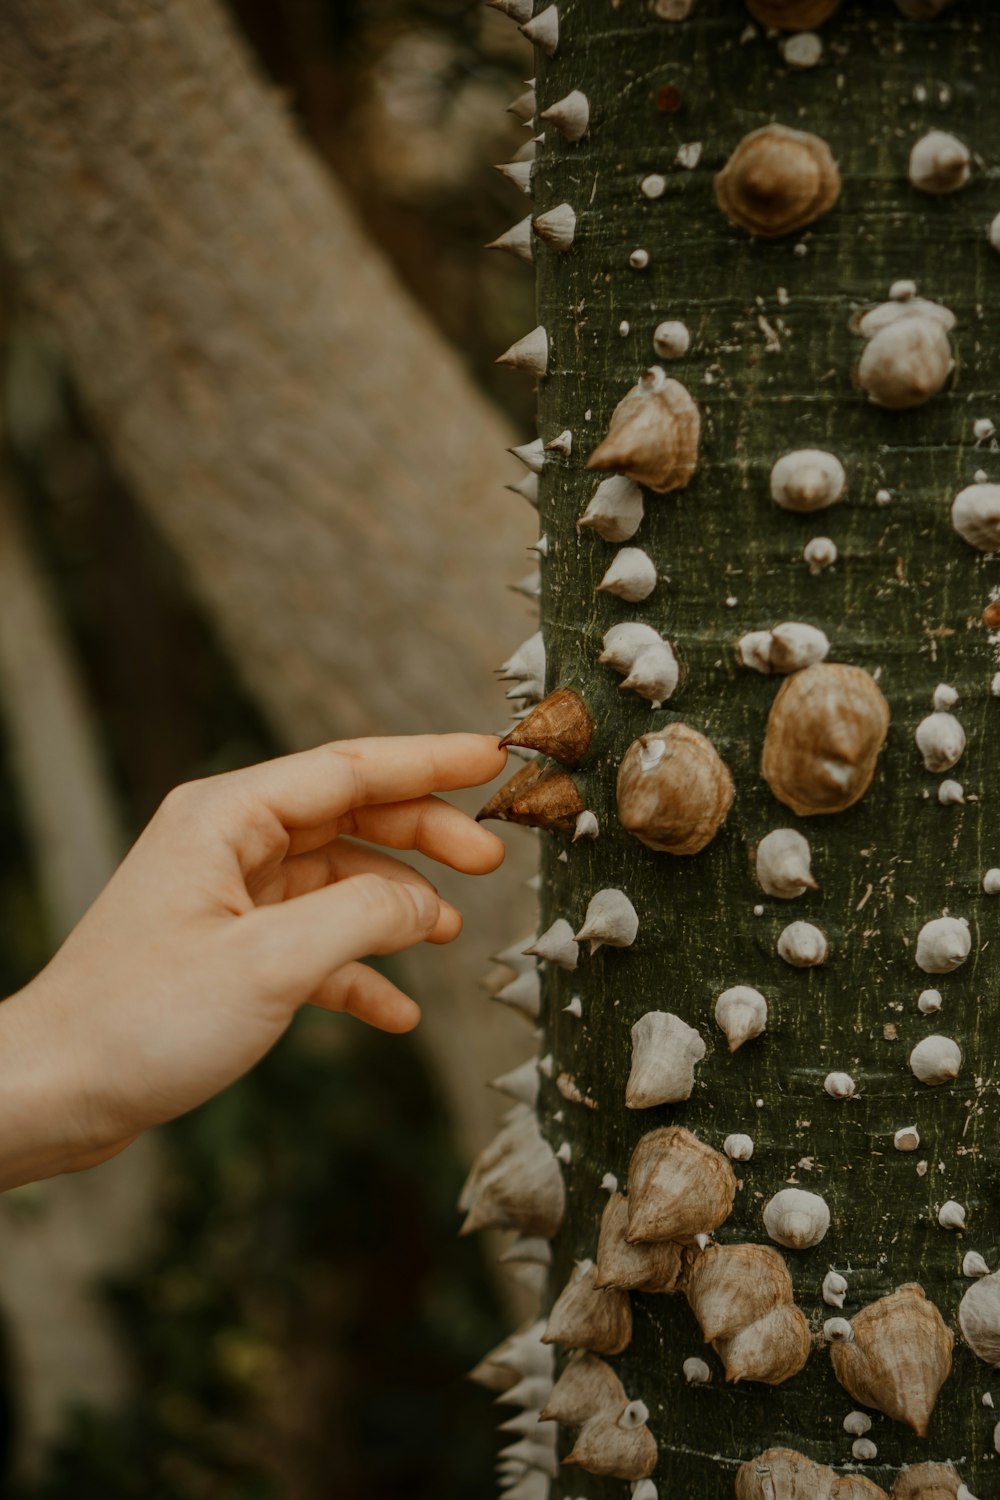 a hand reaching for a mushroom on a tree